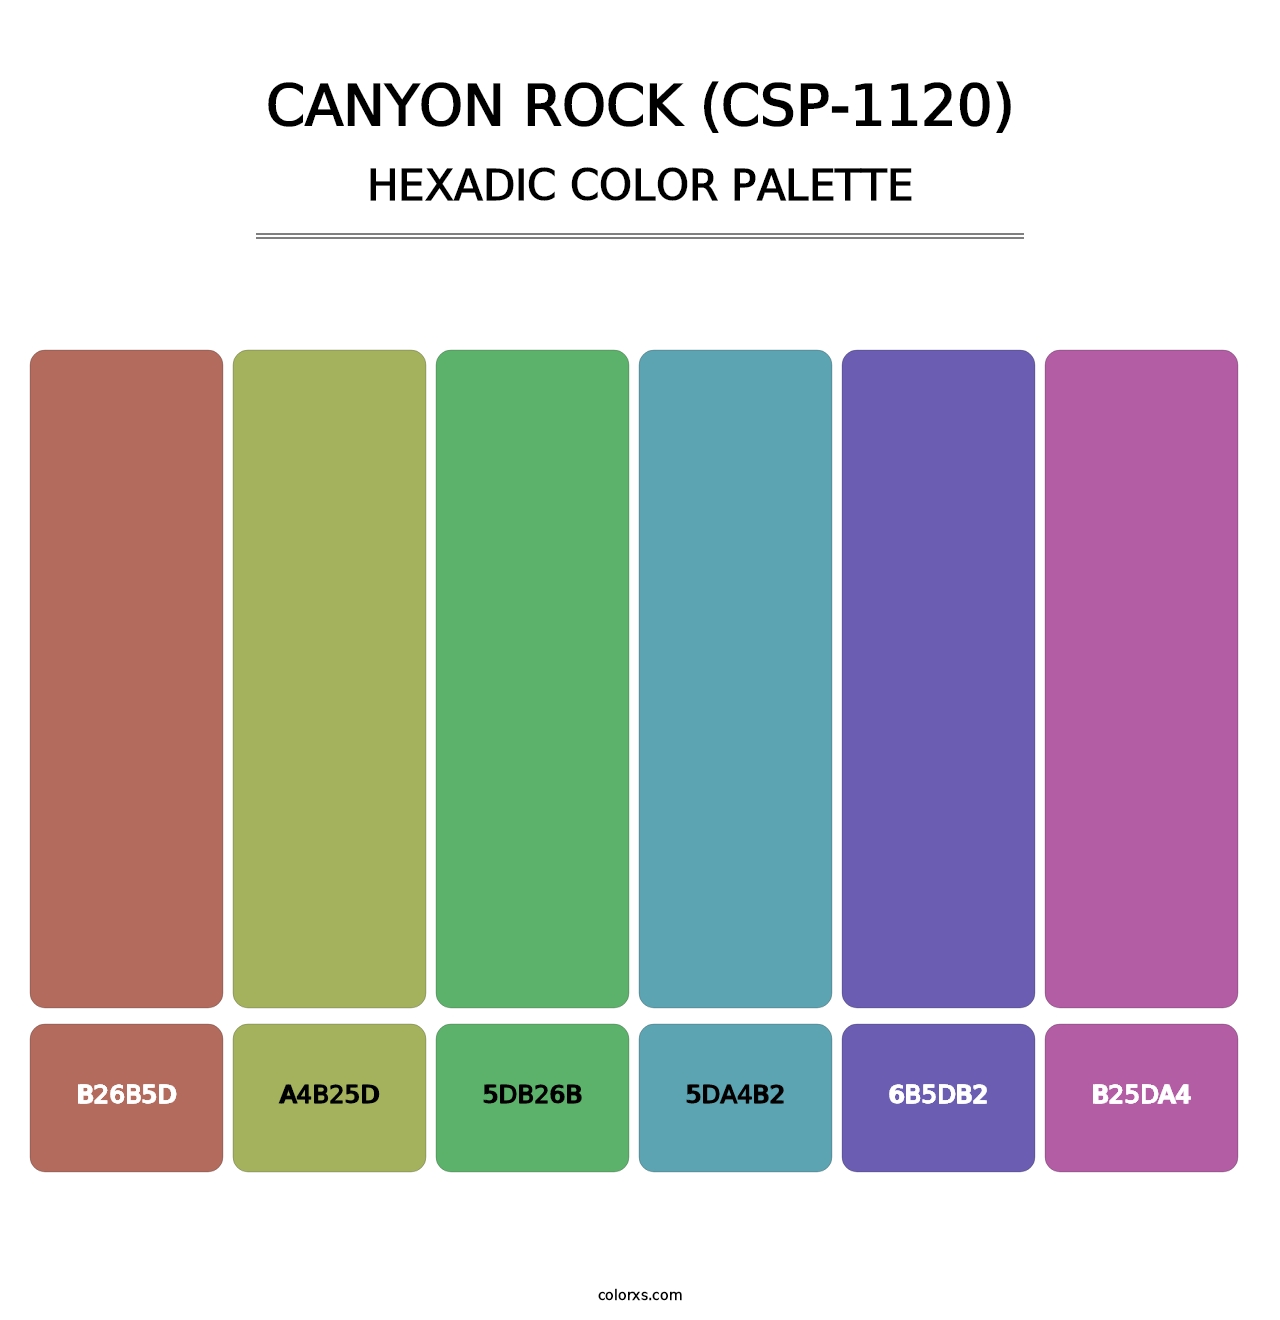 Canyon Rock (CSP-1120) - Hexadic Color Palette